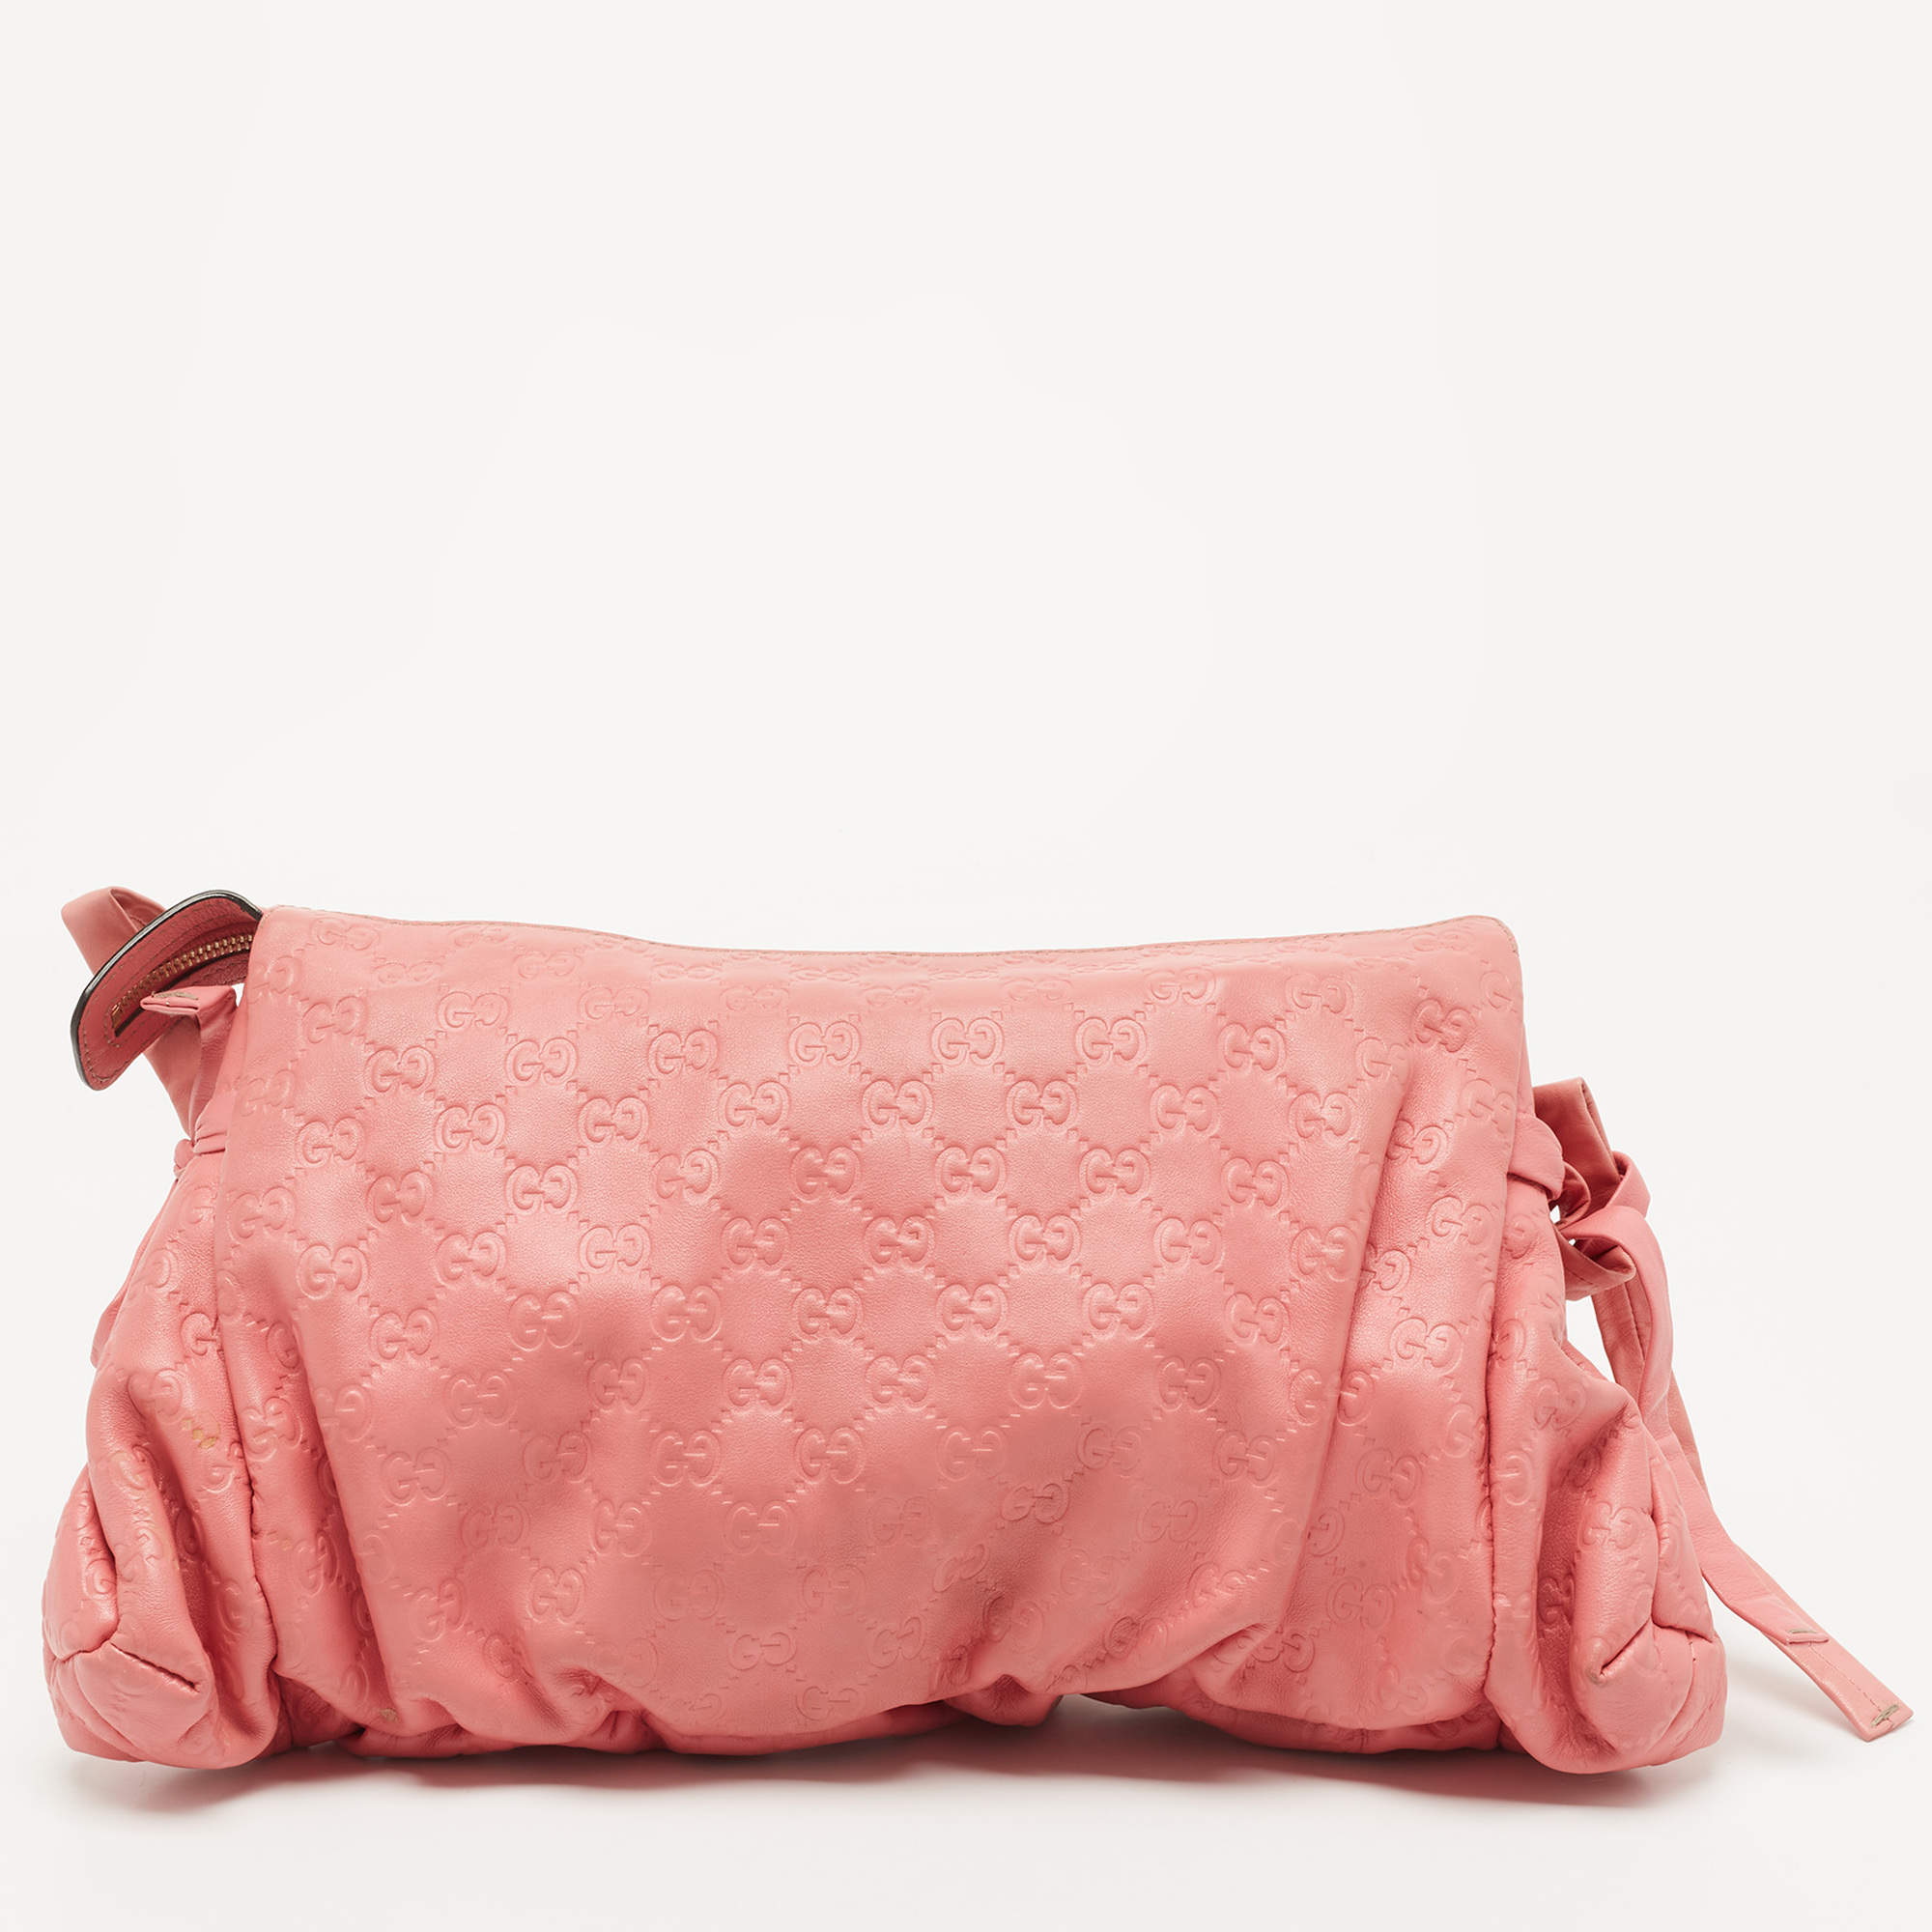 Gucci, Bags, Vintage Pink Gucci Bag